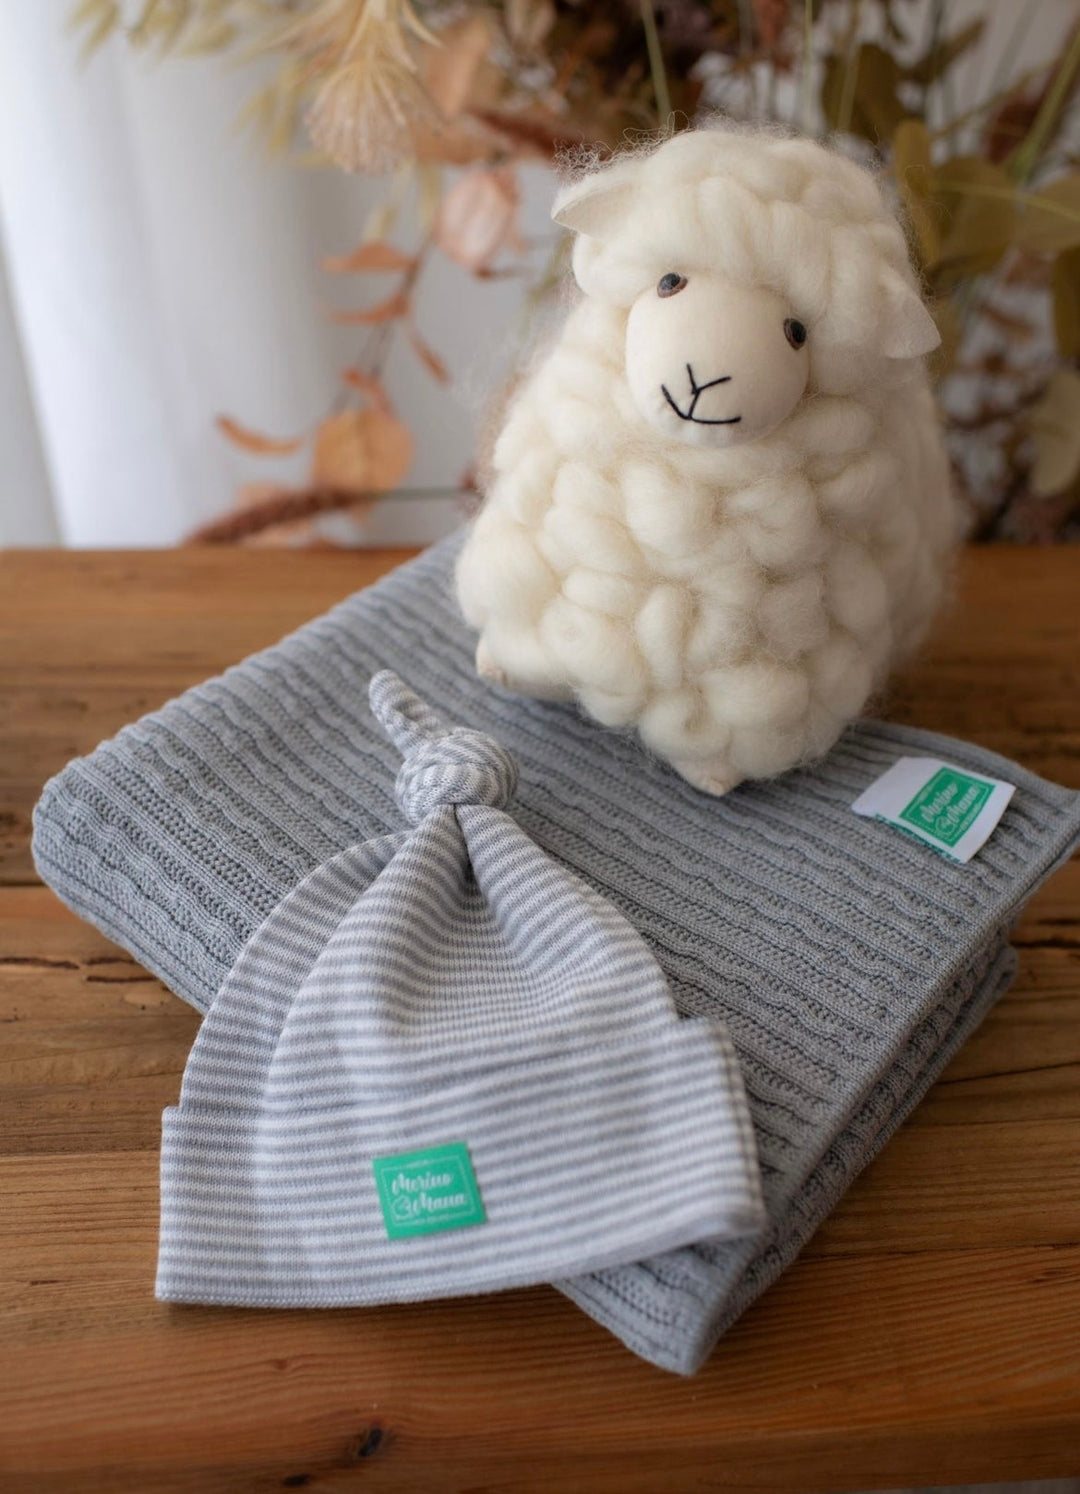 Merino Textured Baby Blanket, Beanie and Baa Baa Sheep Gift Set